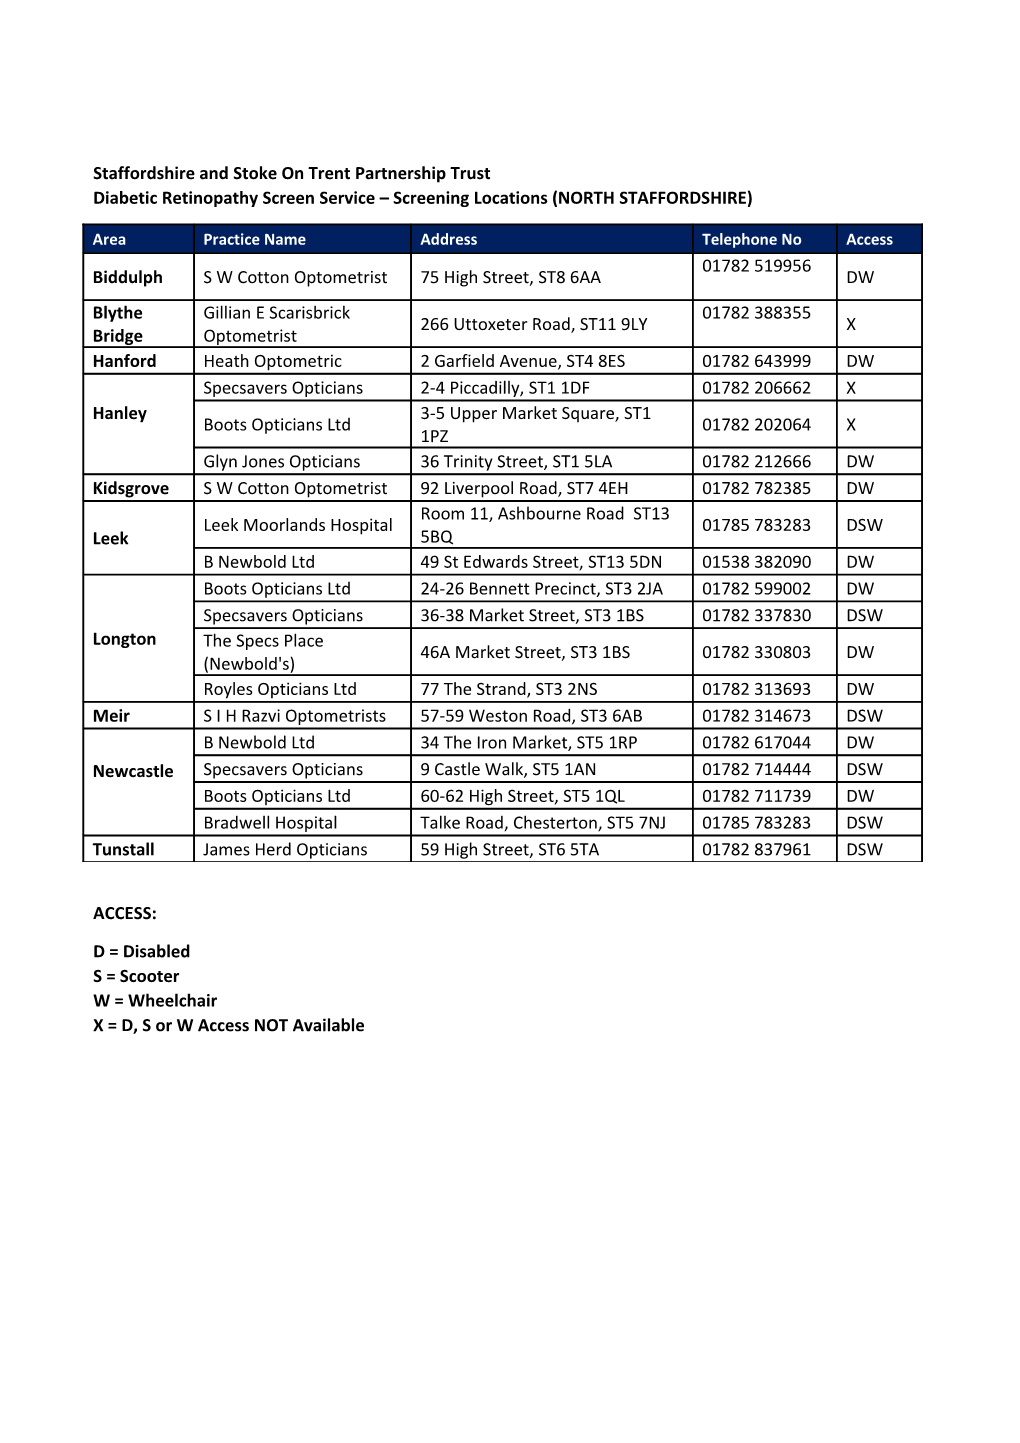 Diabetic Retinopathy Screen Service Screening Locations (SOUTH STAFFORDSHIRE)